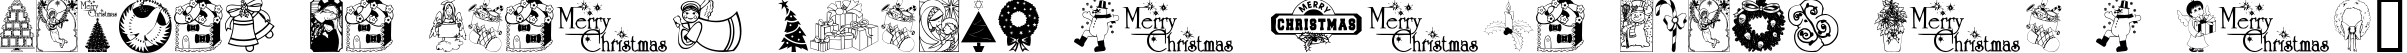 Пример написания шрифтом ChristmasTime текста на французском